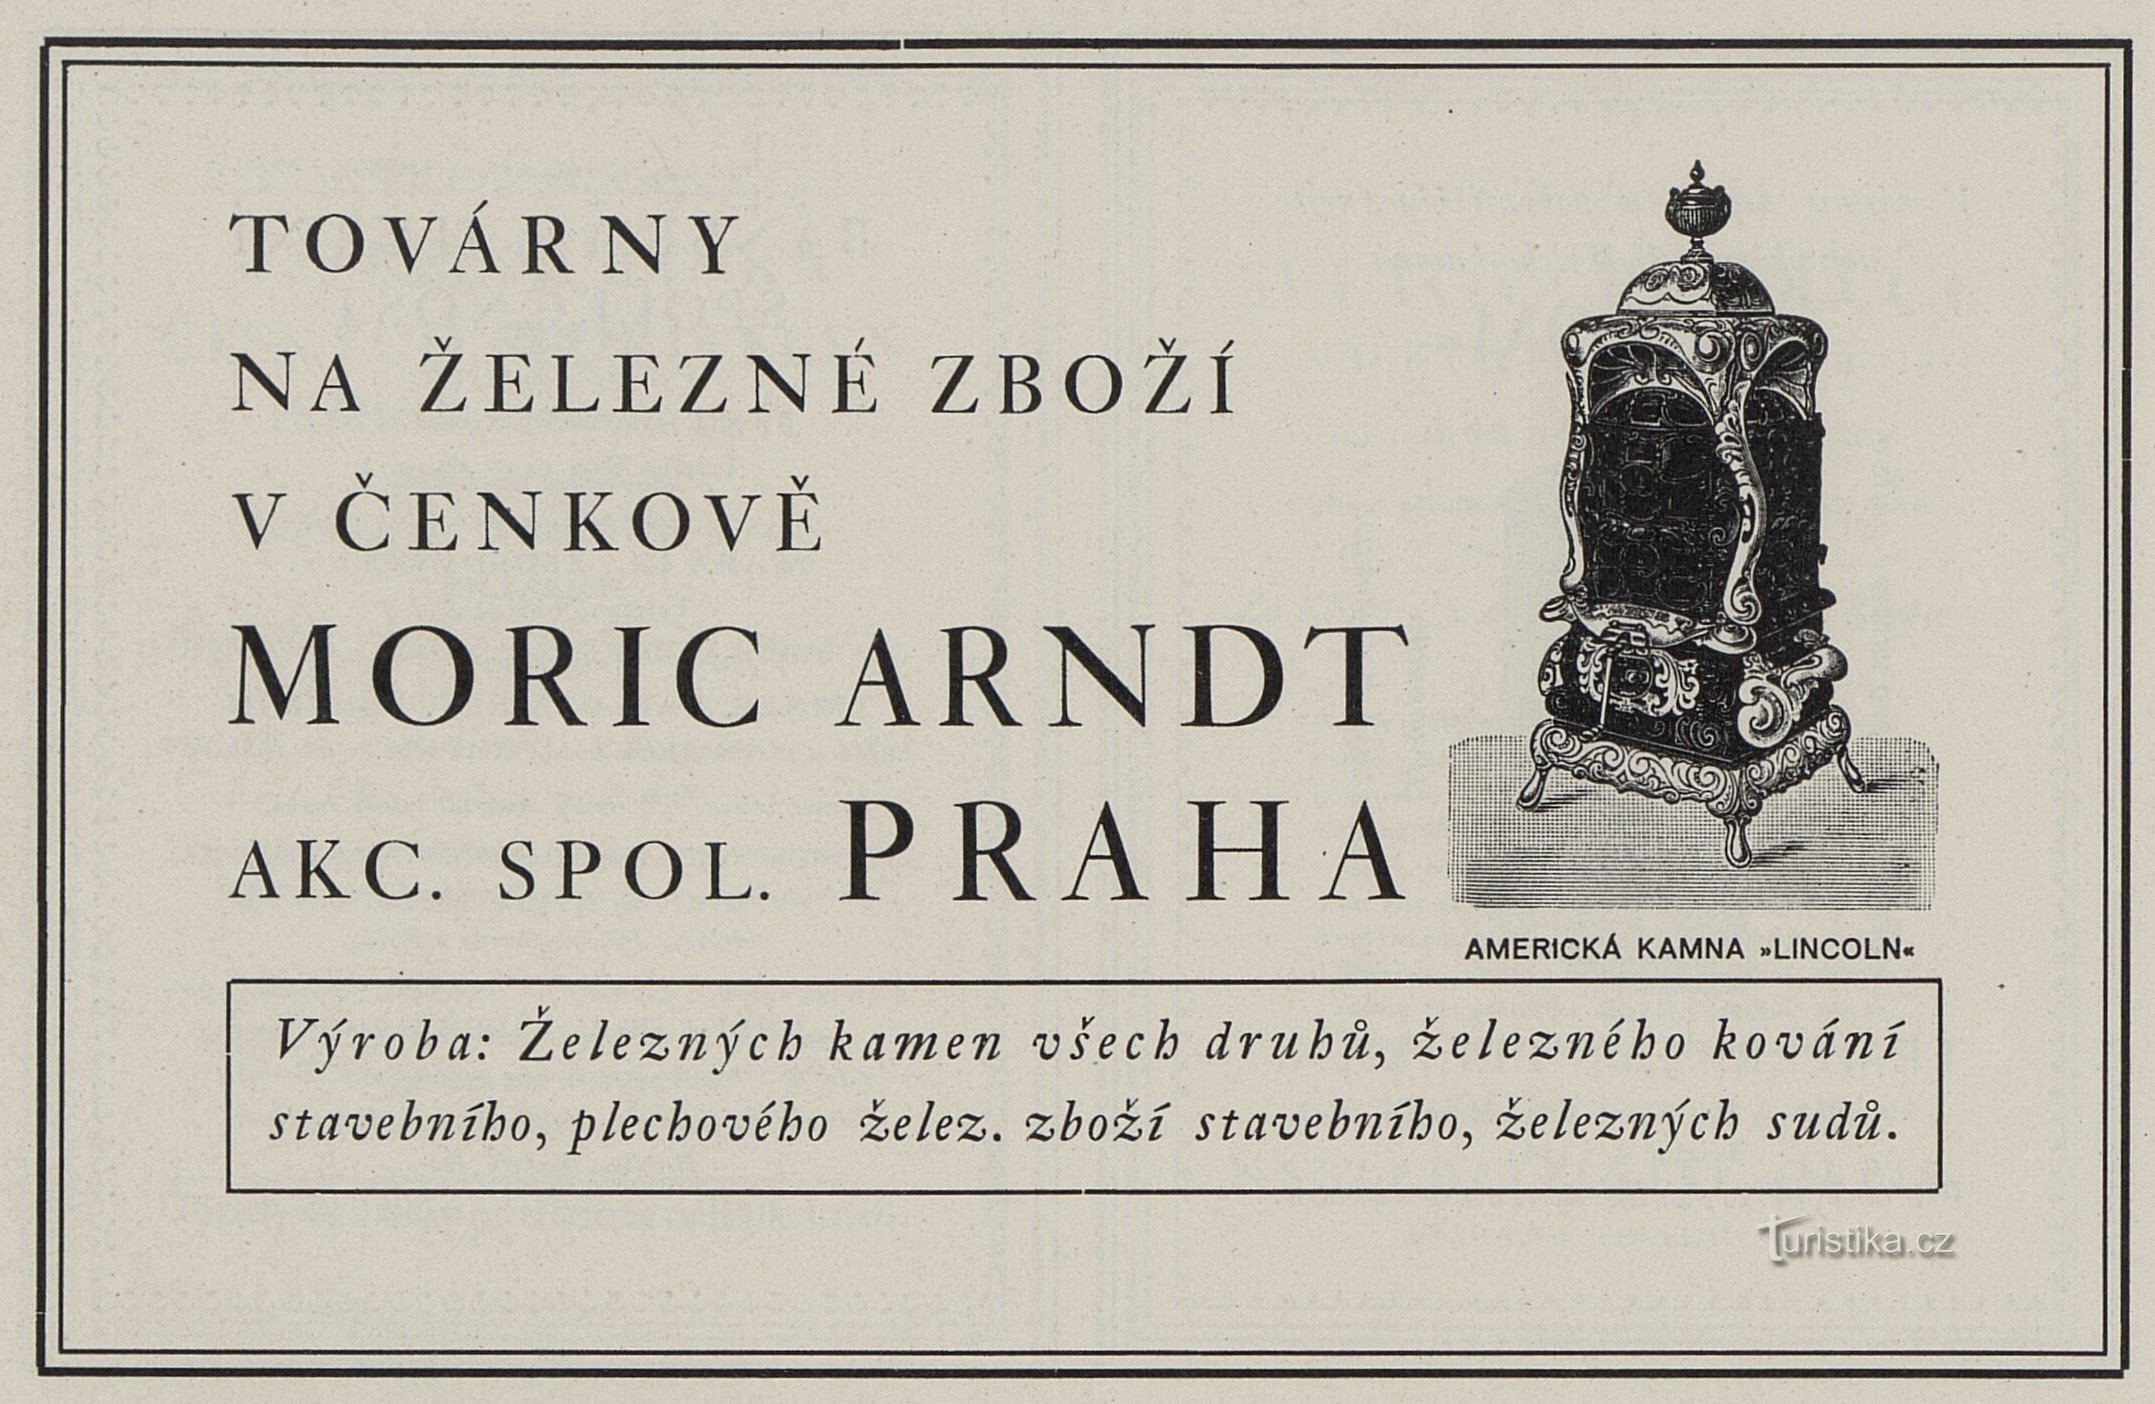 Reklama Morica Arndta z 1925 roku